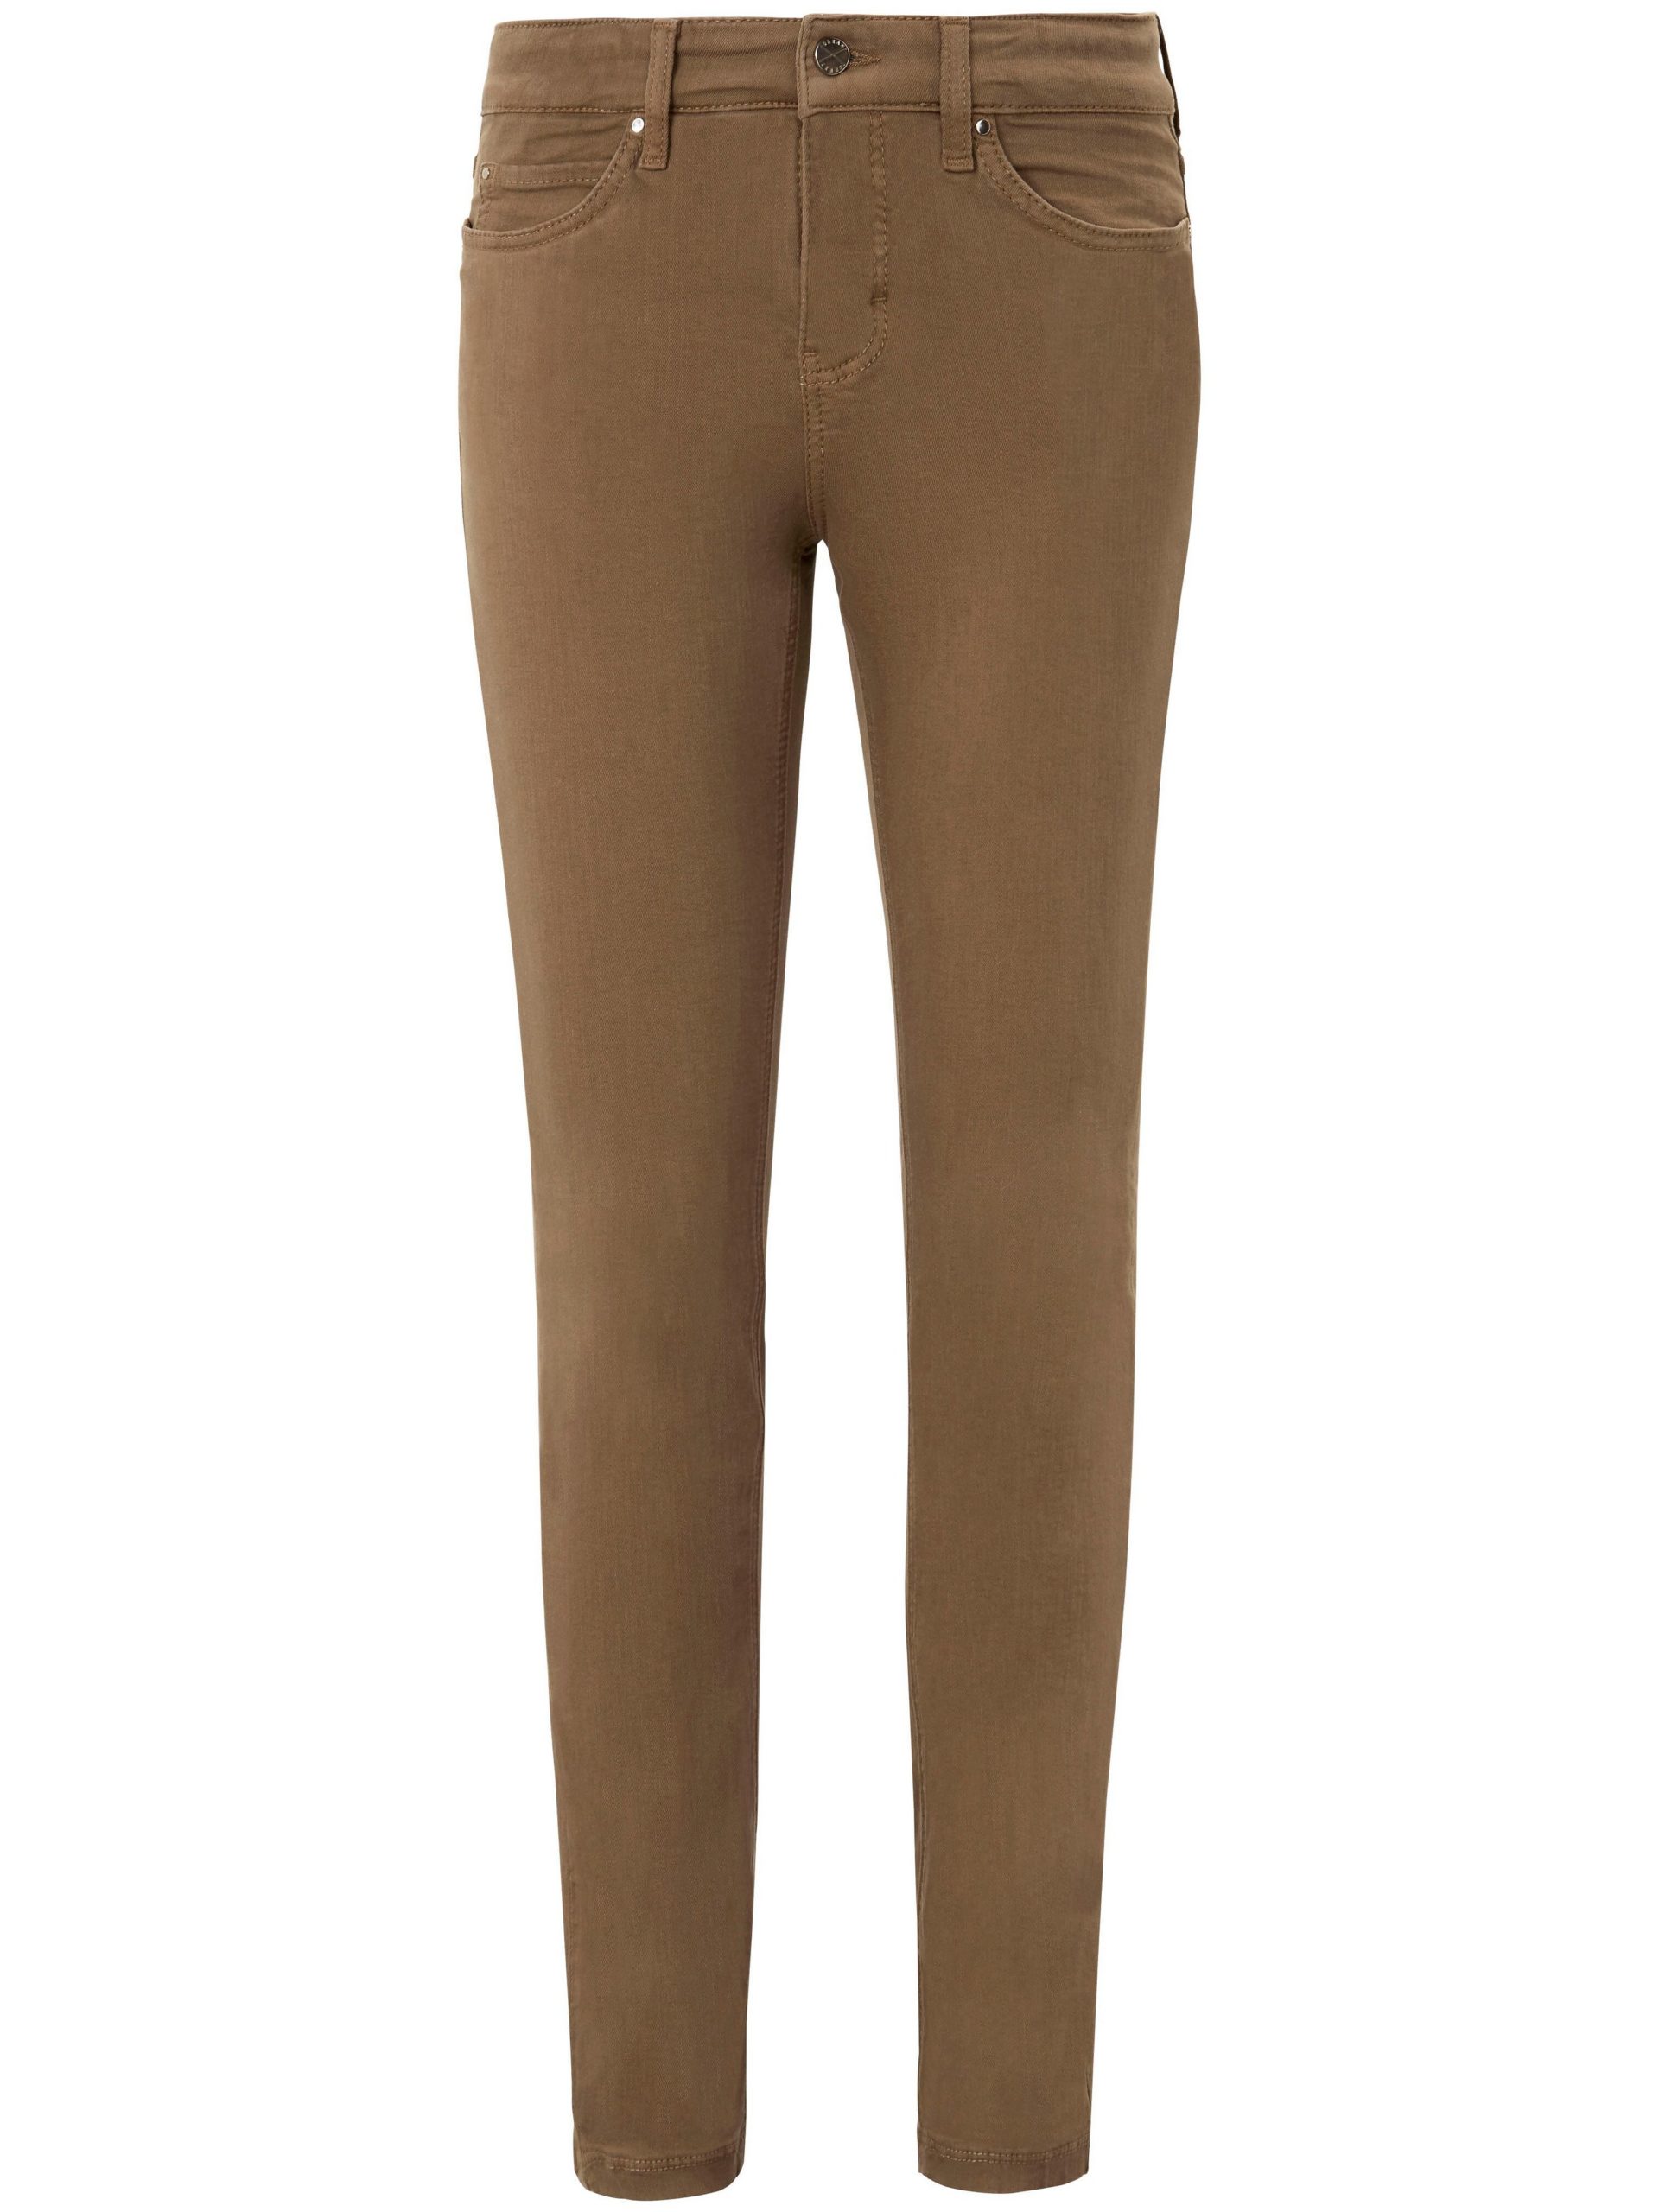 Jeans, model Dream Skinny, lengte 28 inch Van Mac beige Kopen